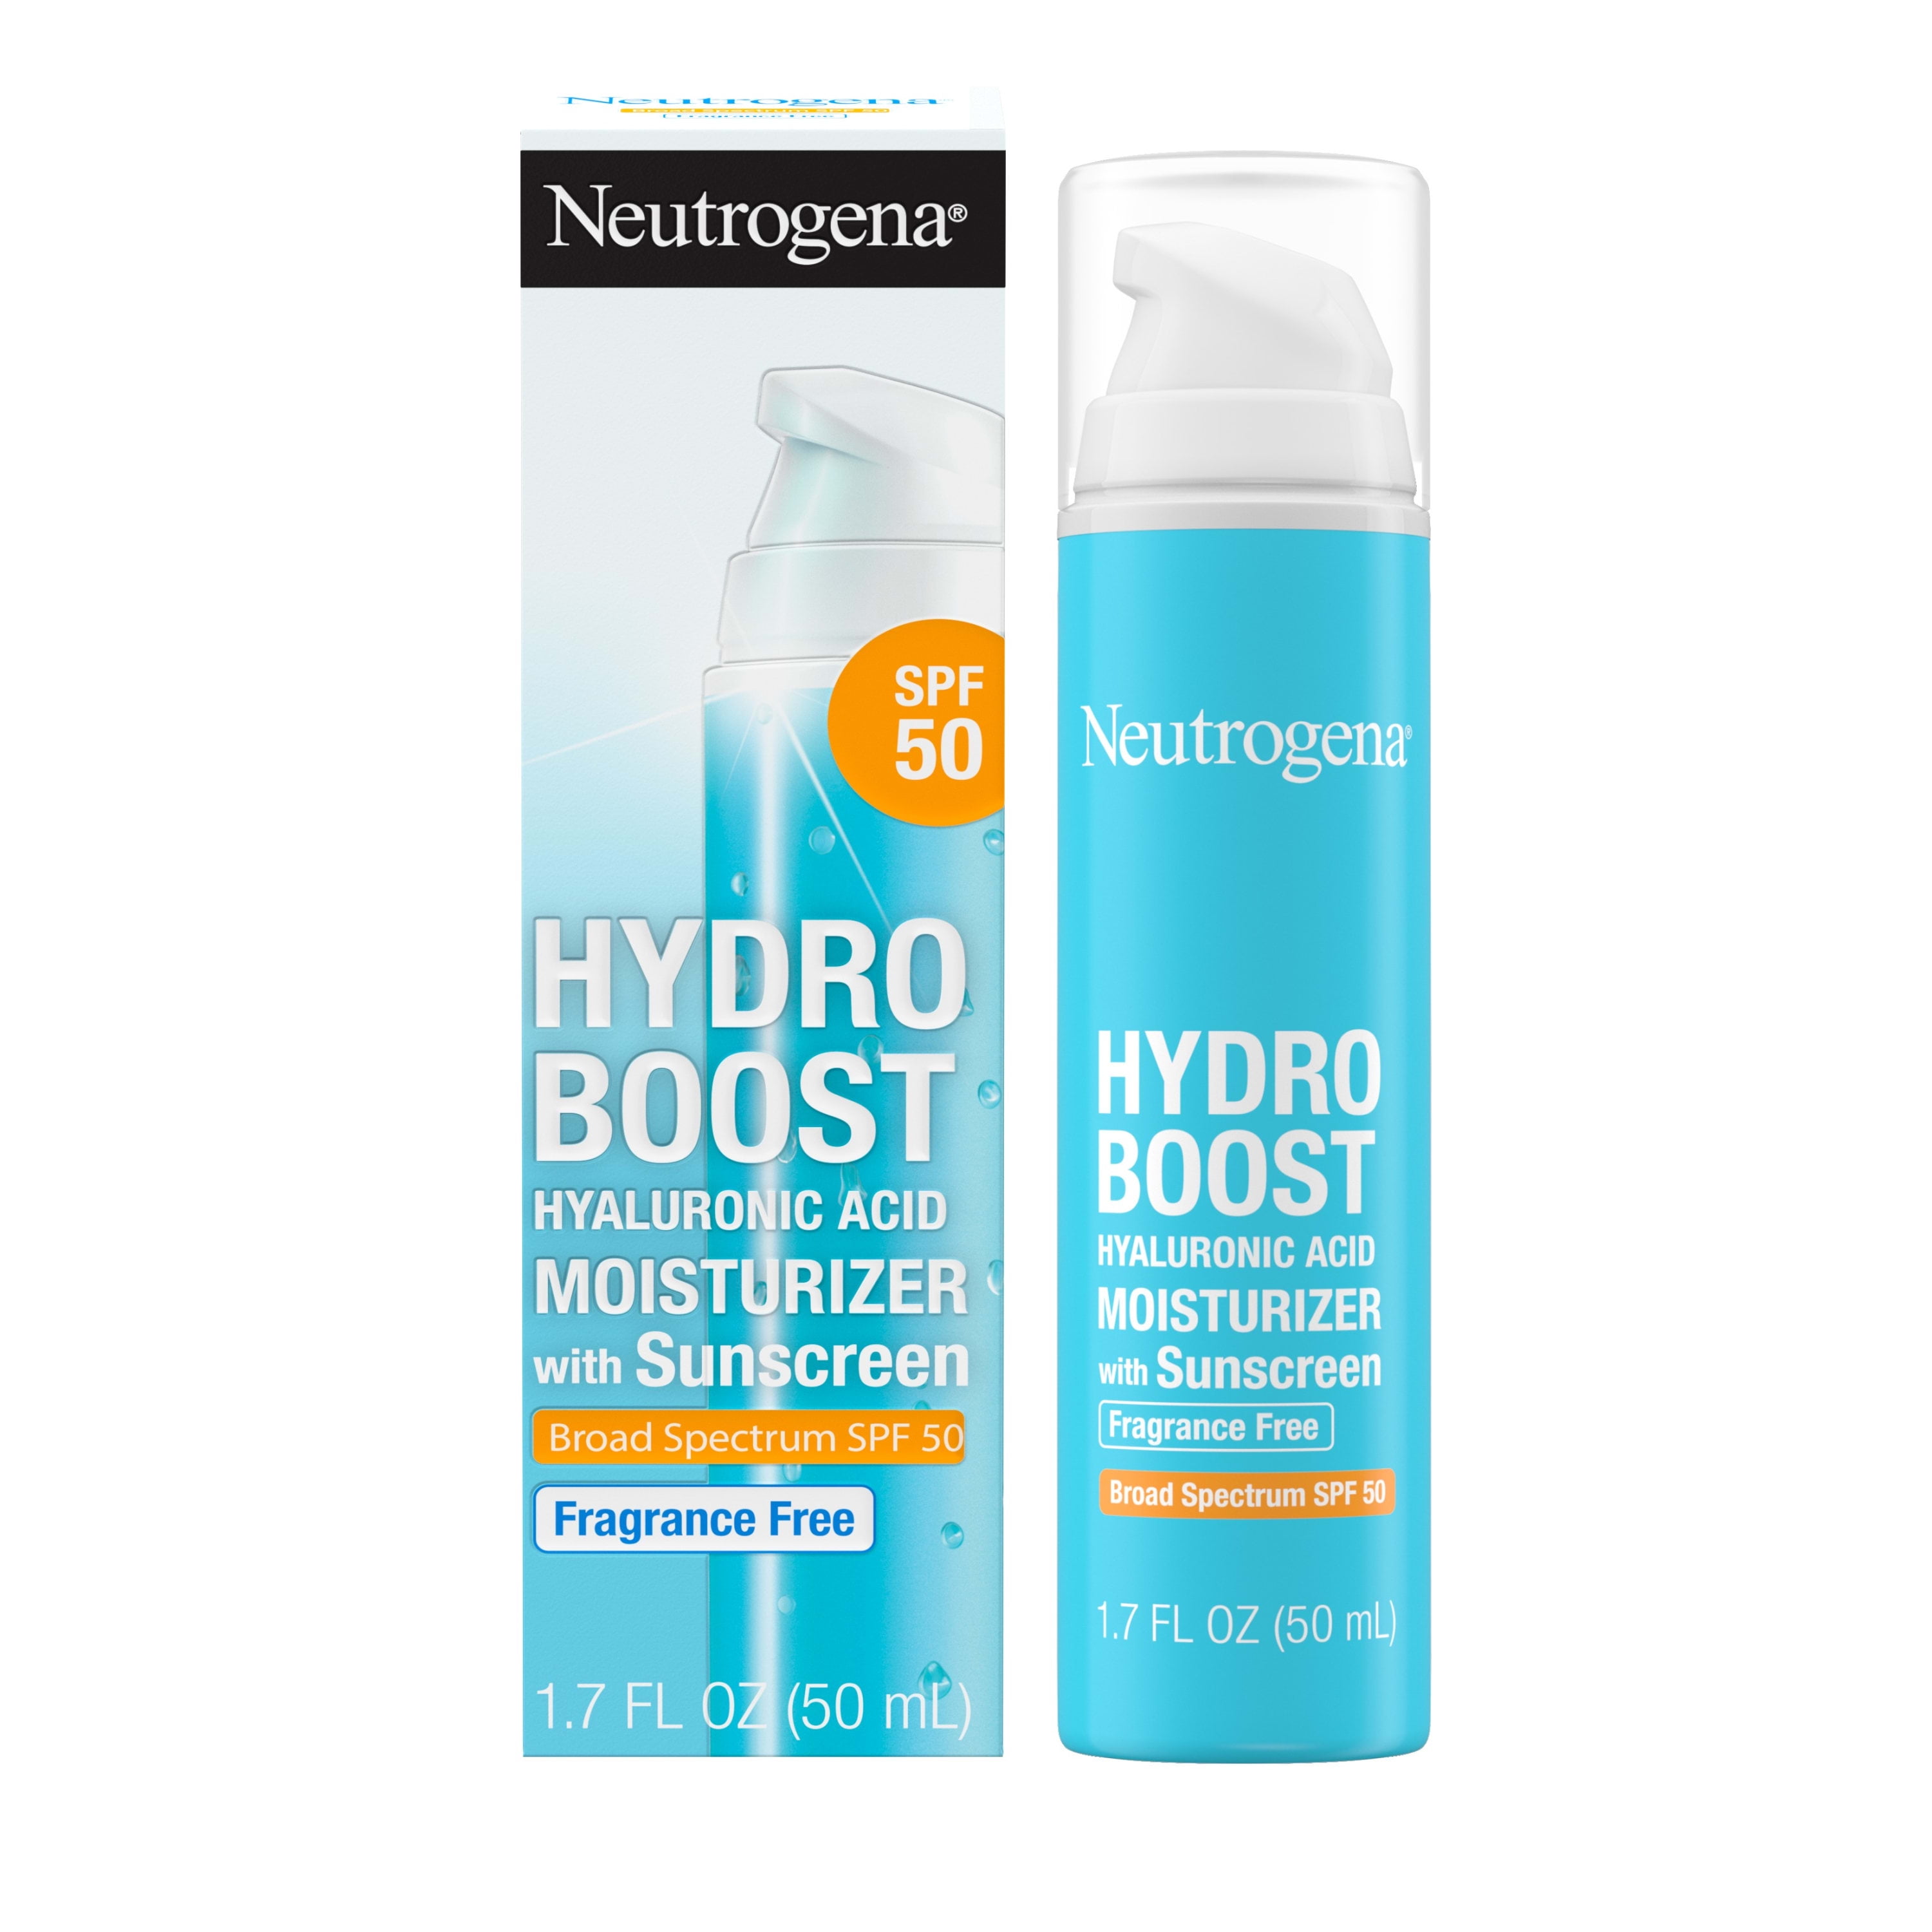 Neutrogena Hydro Boost SPF 50 Hyaluronic Acid Moisturizer, 1.7 fl. oz